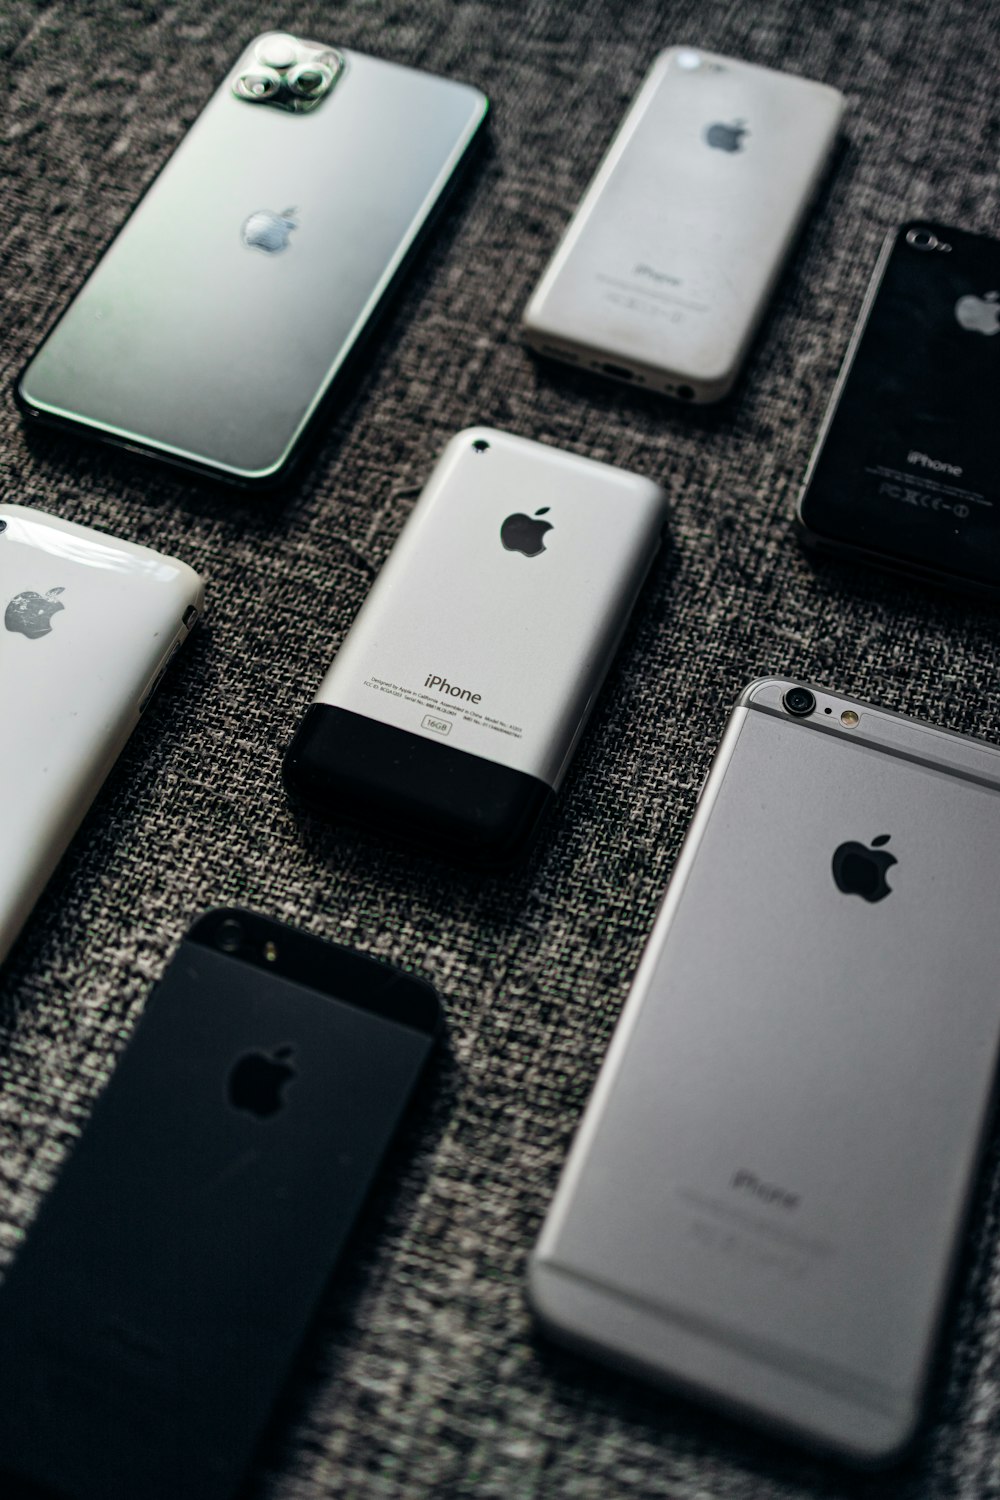 Silber iPhone 6 und Space Grau iPhone 6